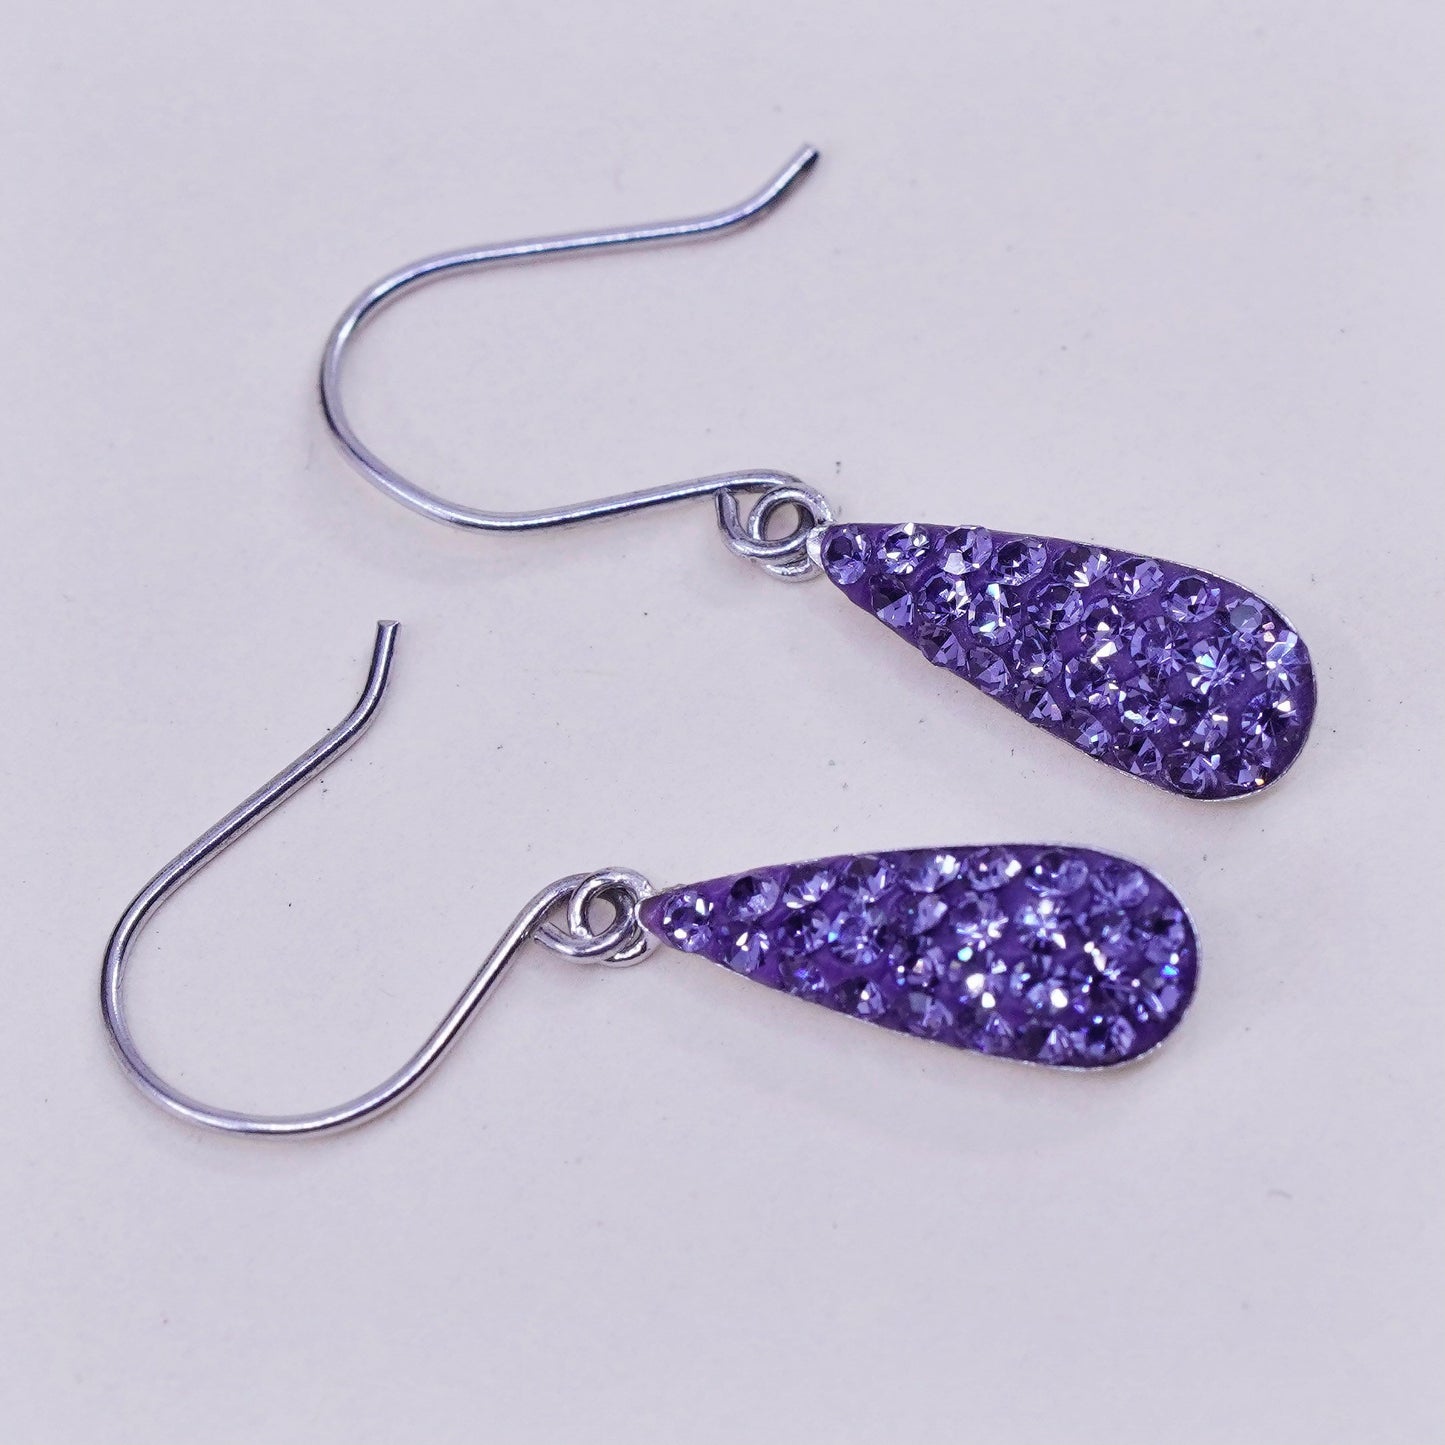 Vintage Sterling 925 silver handmade teardrop earrings with purple cluster cz